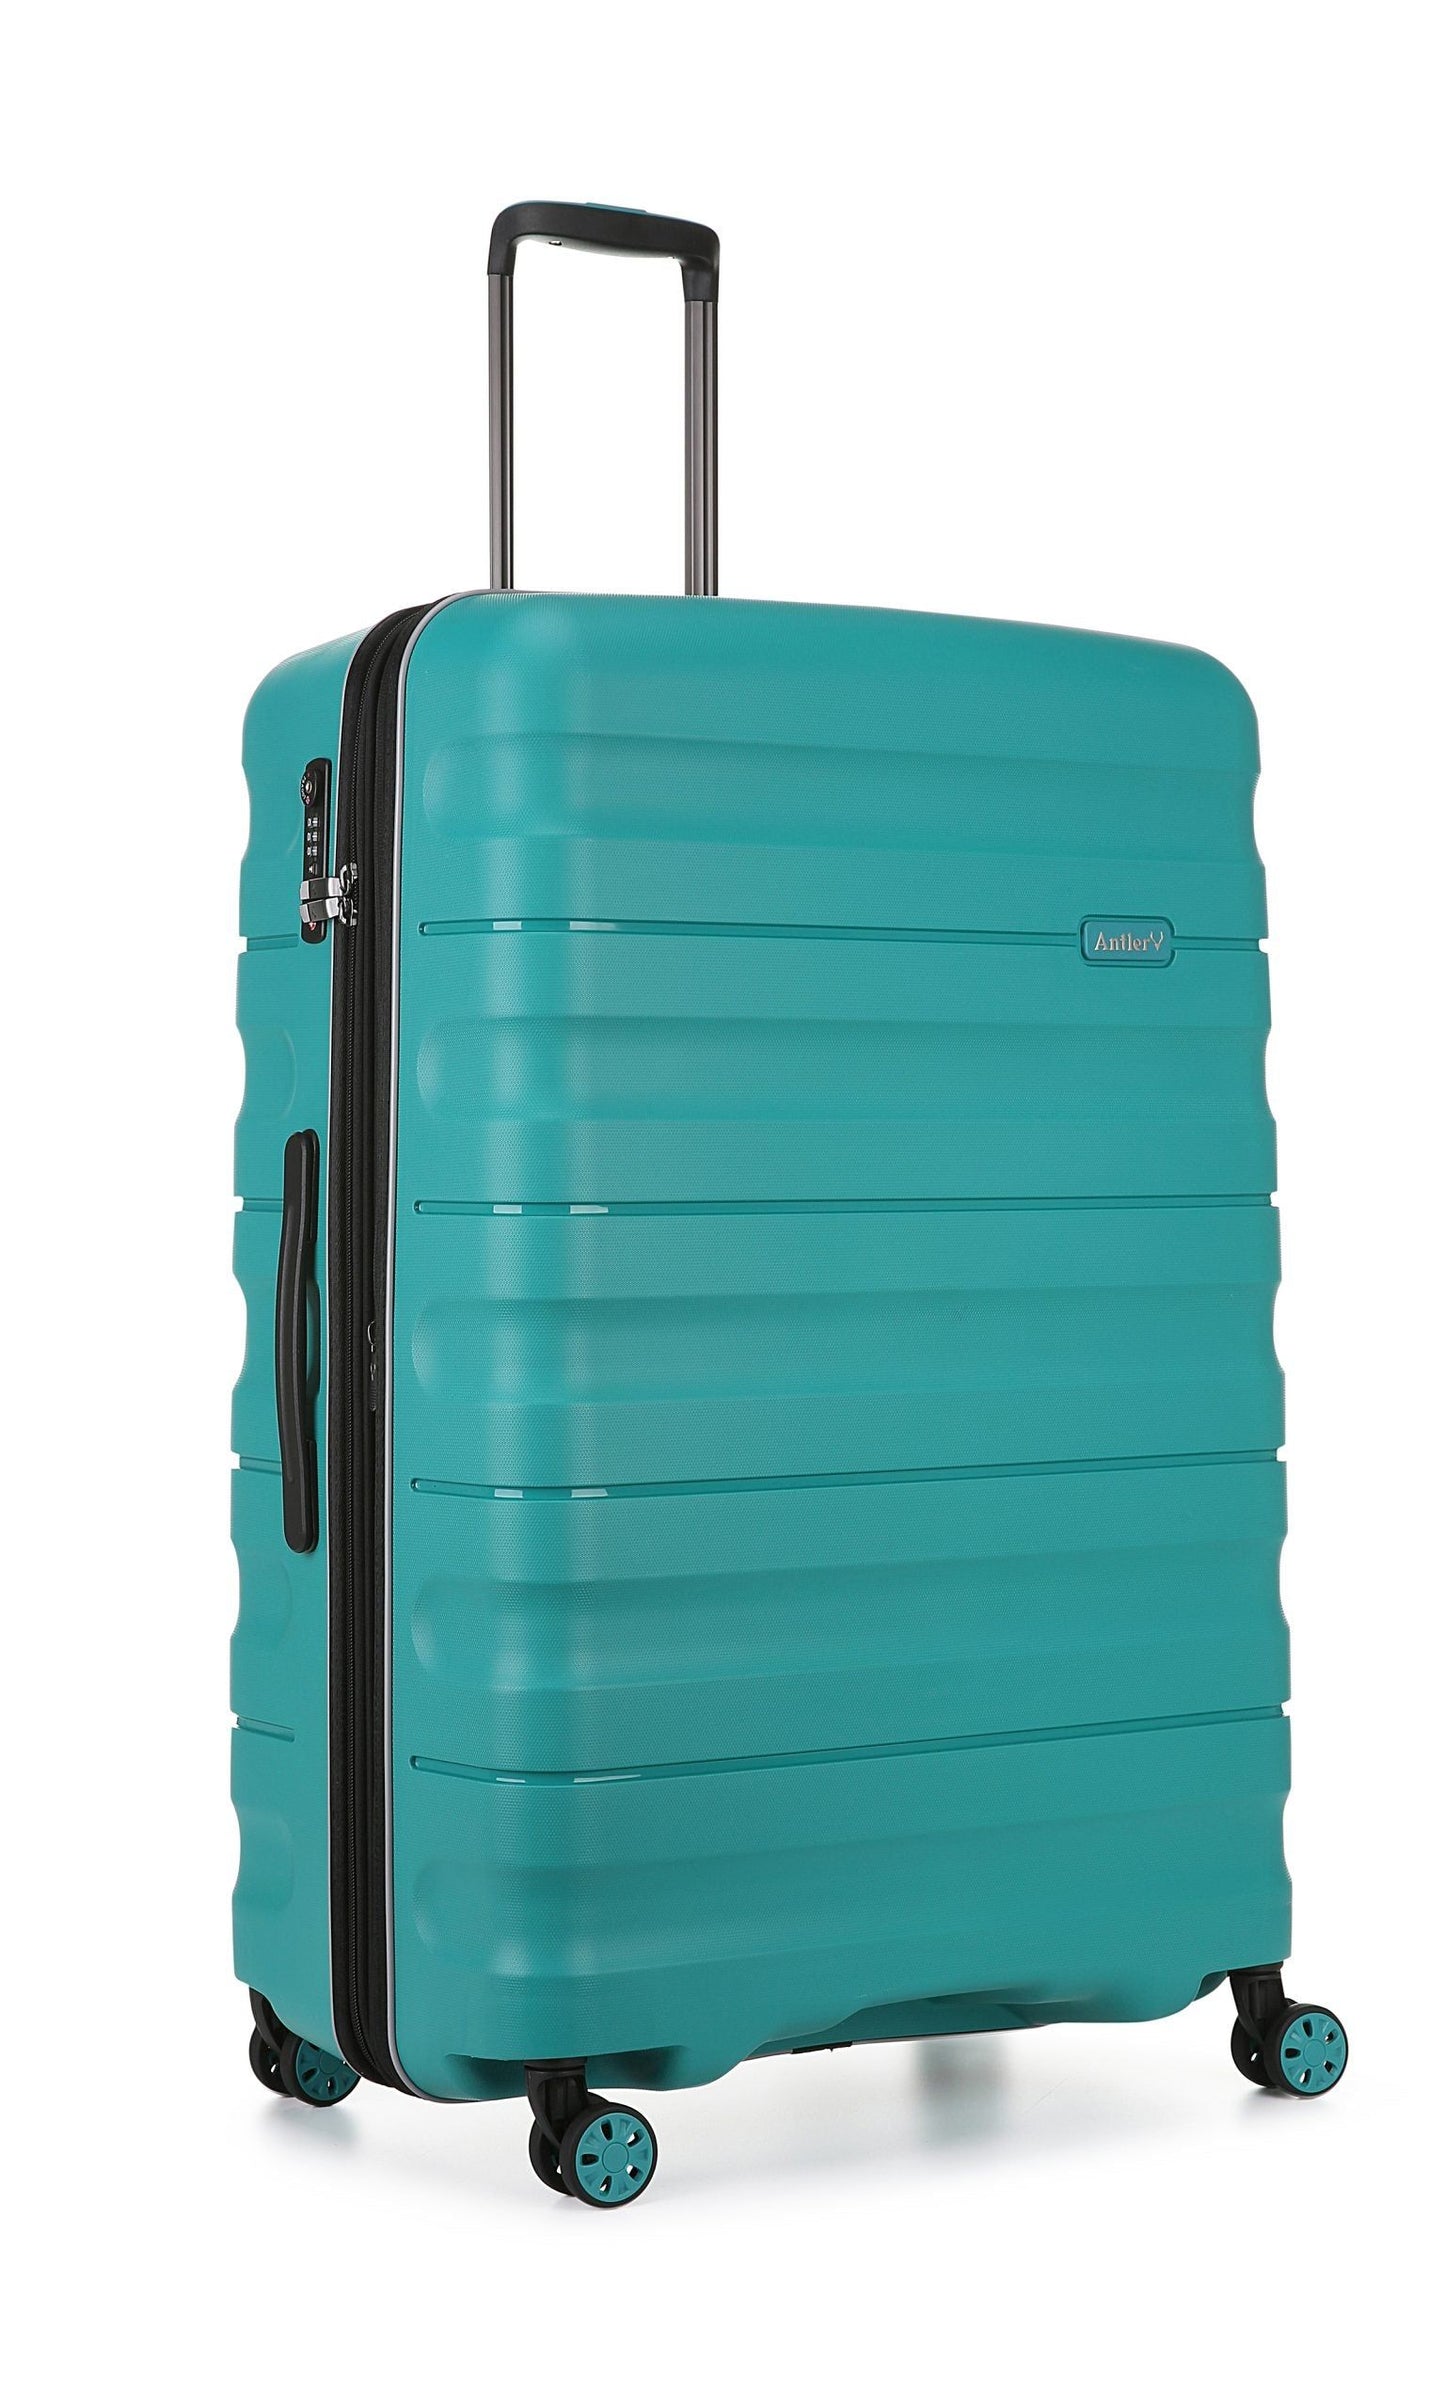 Antler - Lincoln Large 80cm Hardside 4 Wheel Suitcase - Teal - rainbowbags